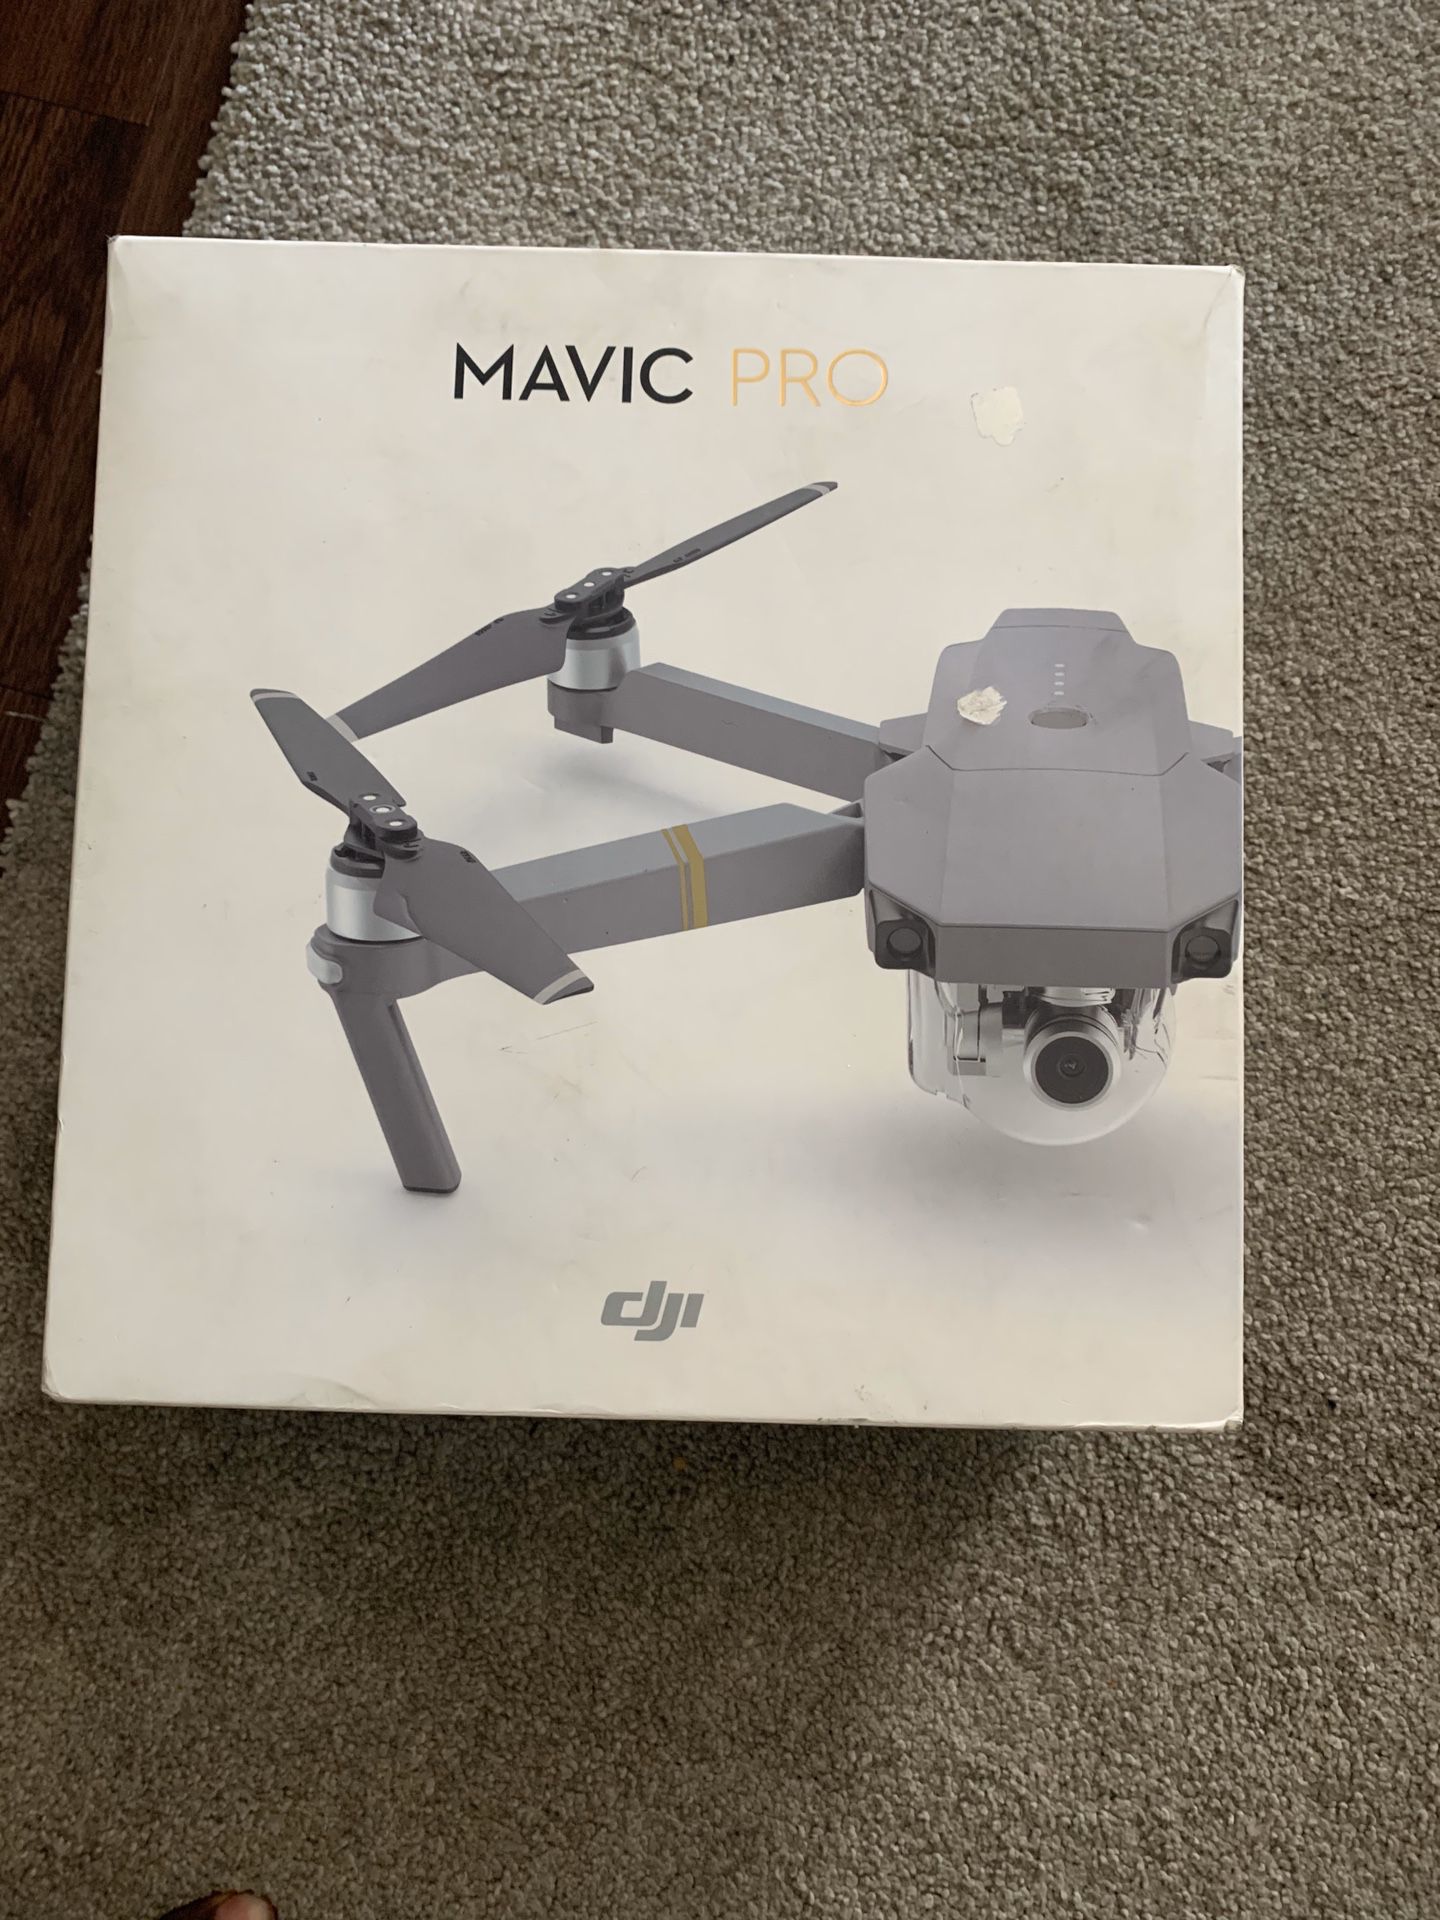 Mavic Pro DJI Drone